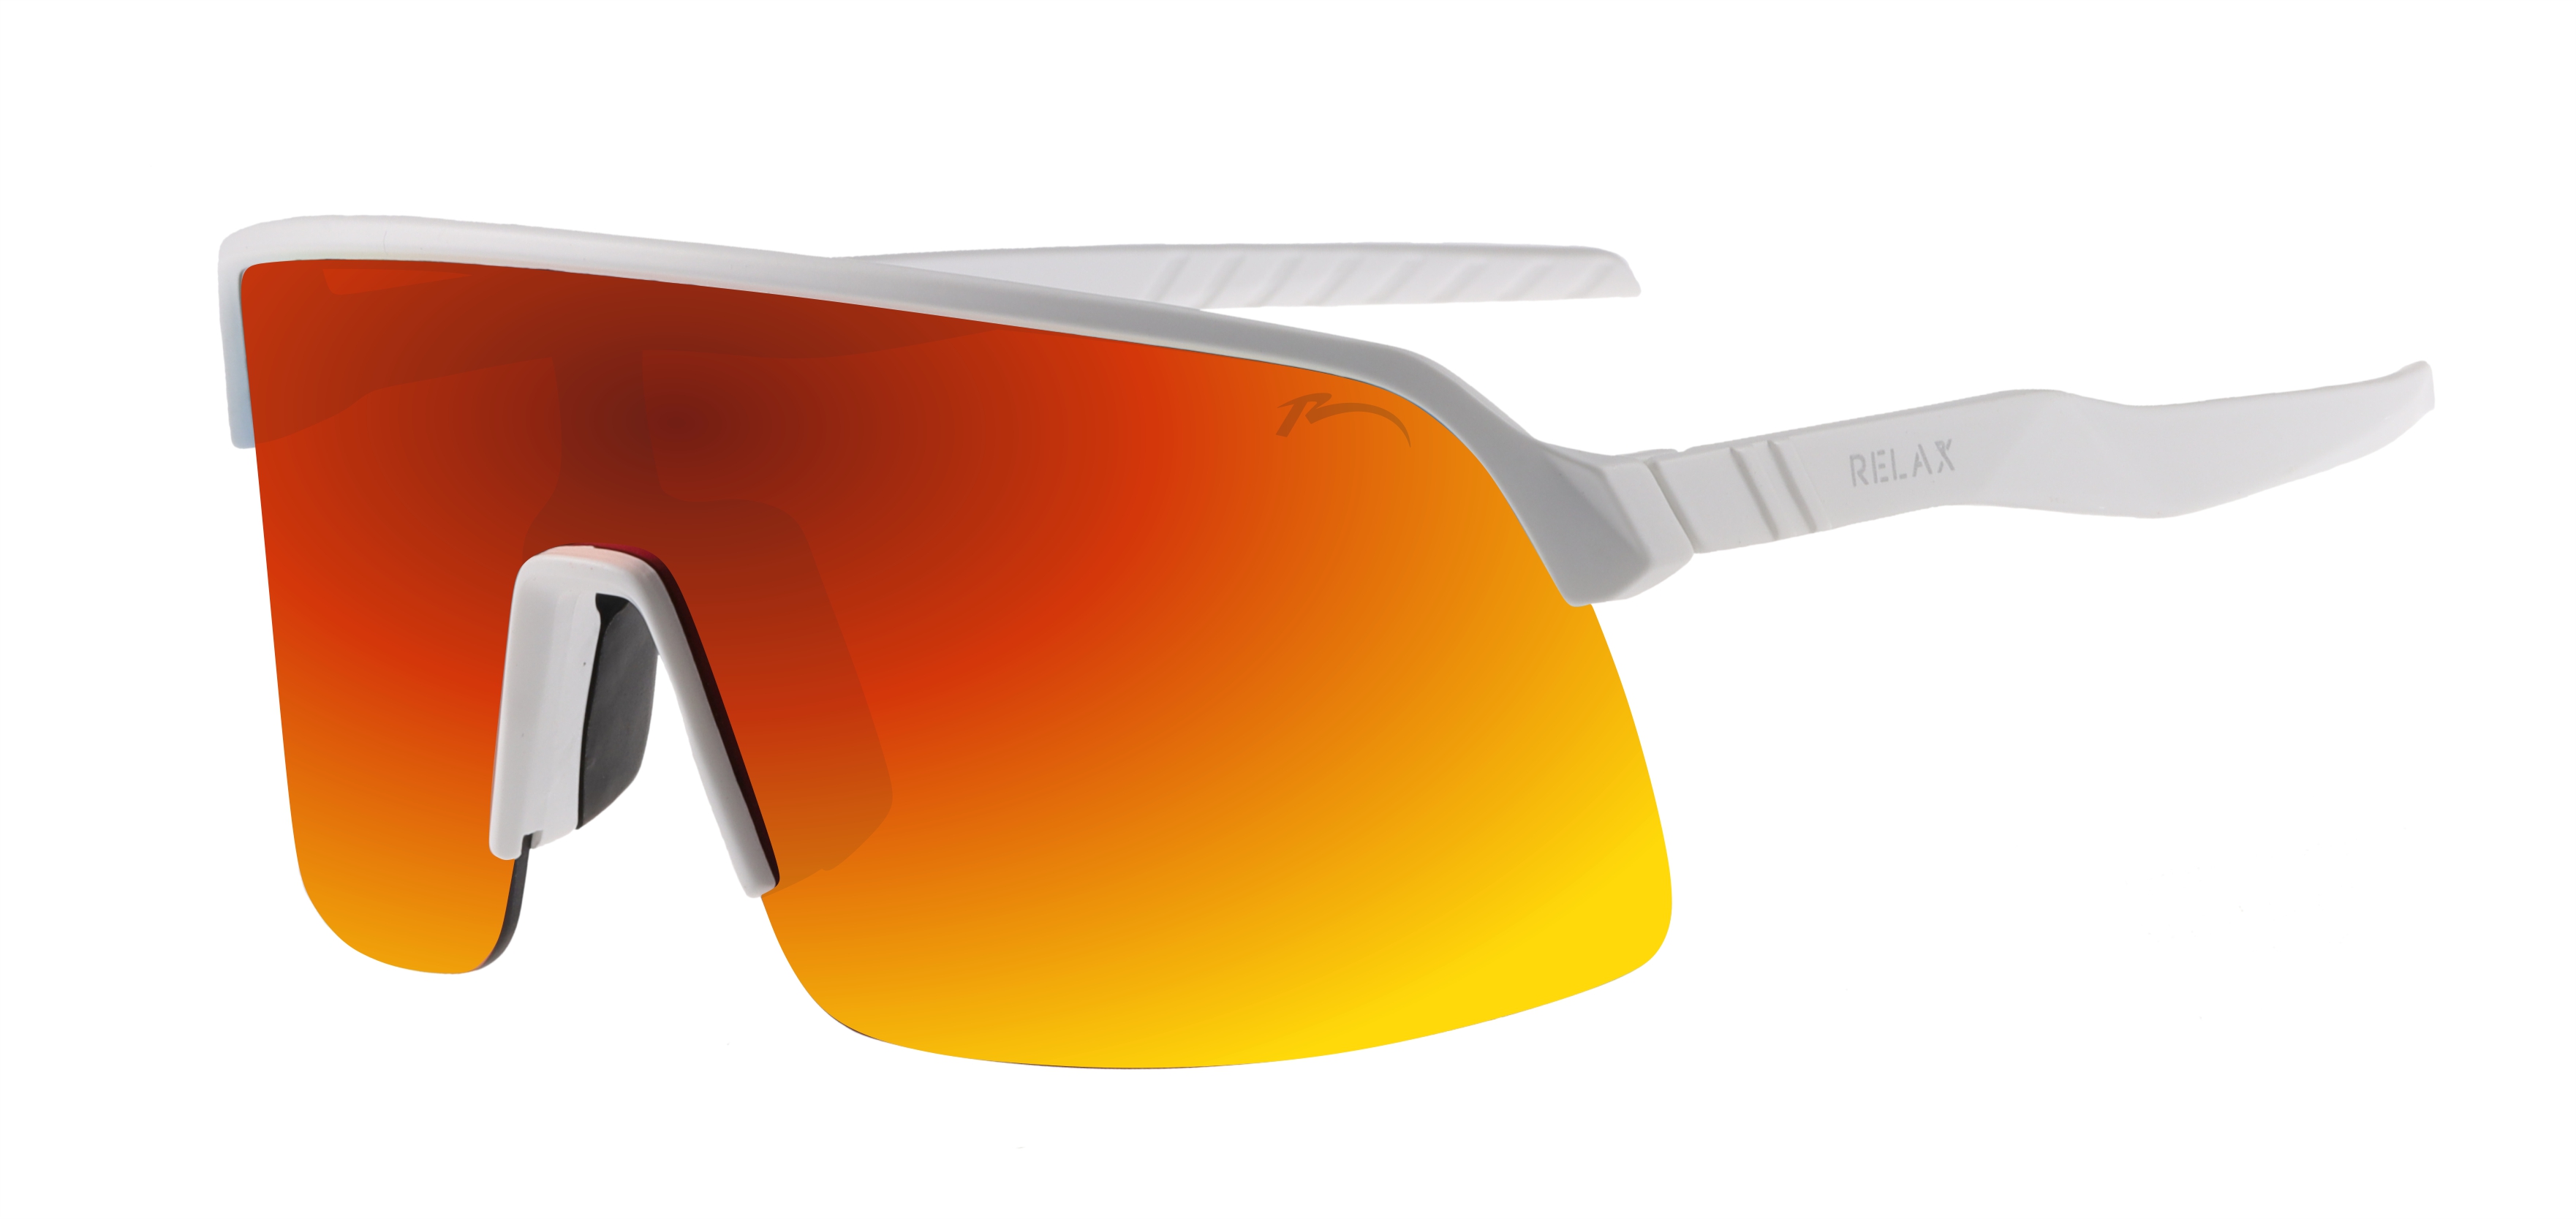 Sport sunglasses  Relax Judo R5430A standard